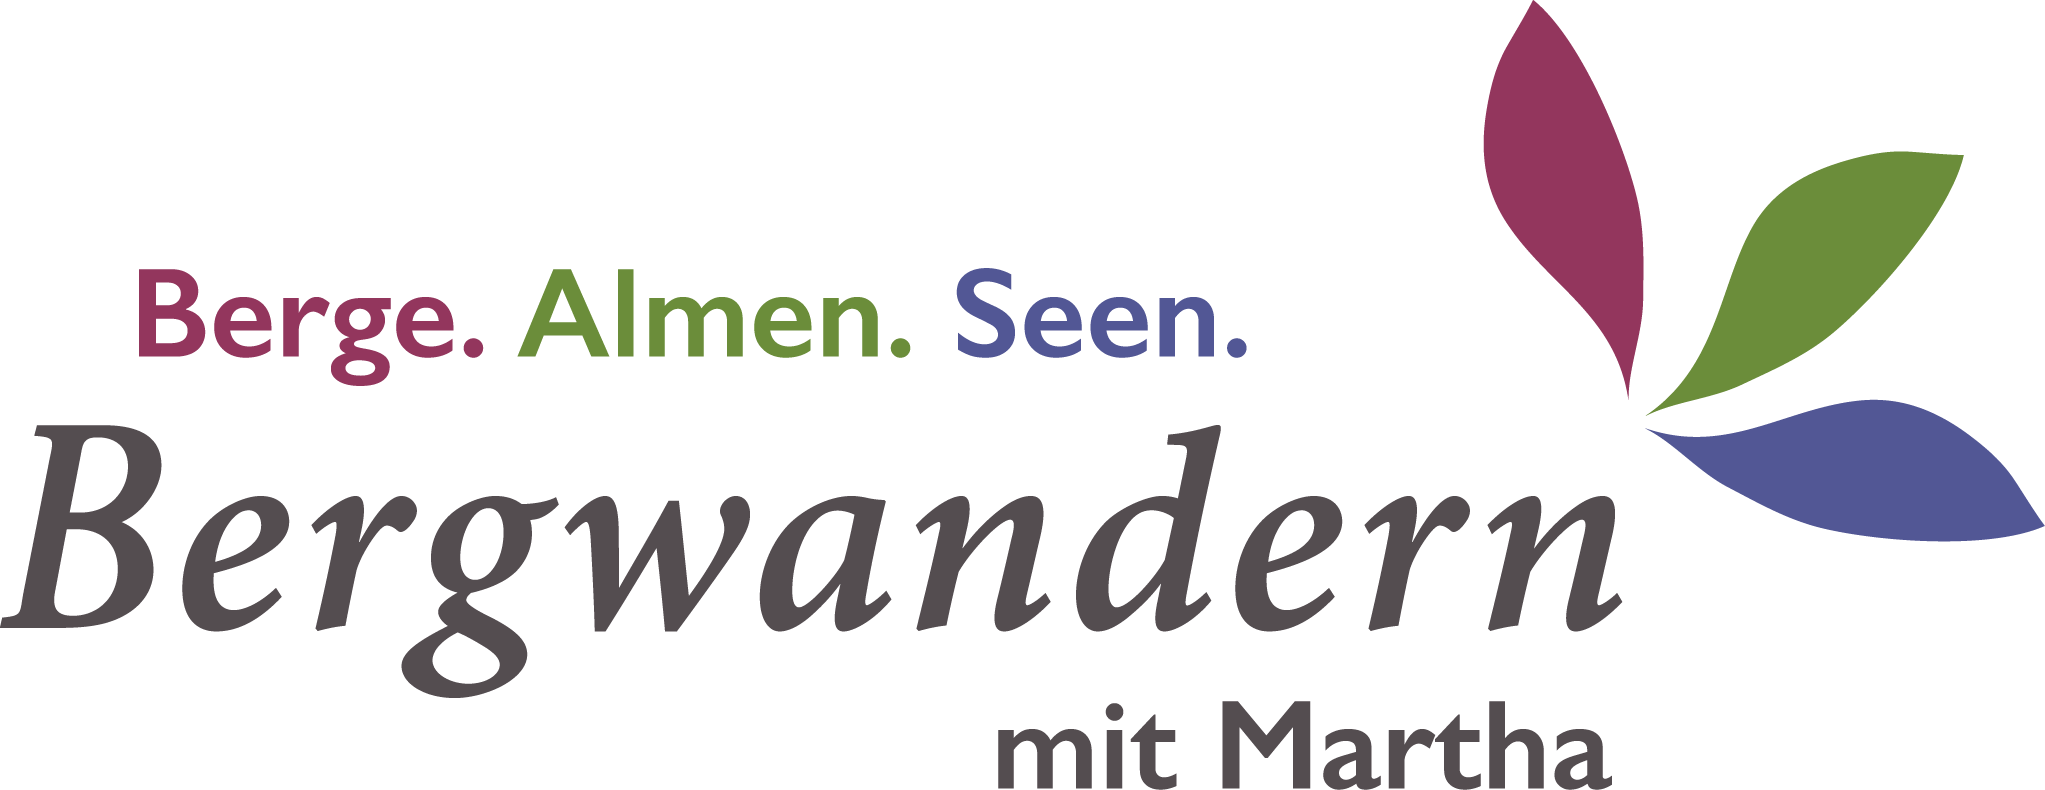 logo_bergwandern_claimpng